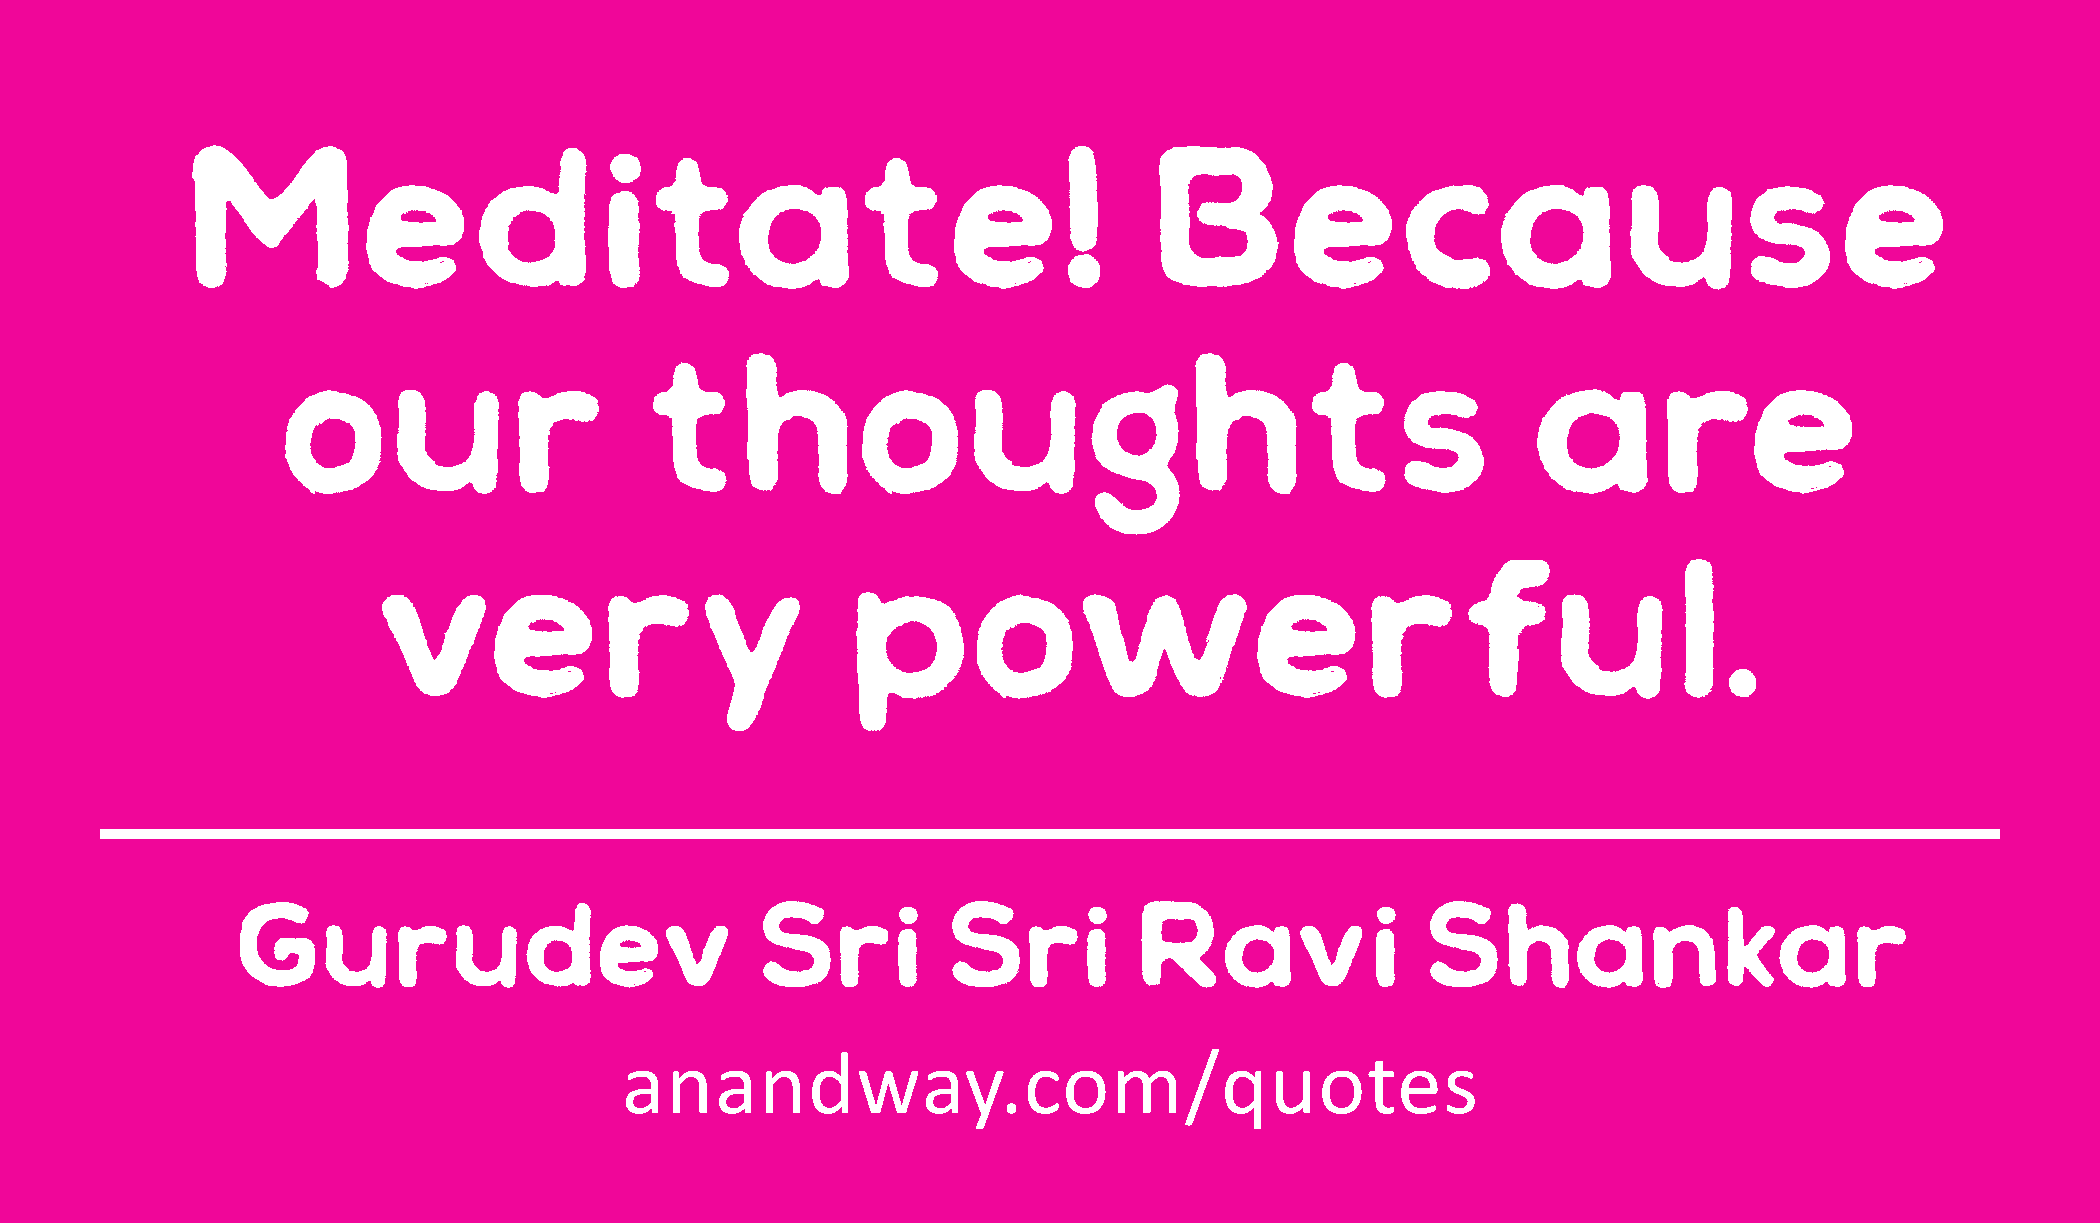 Meditate! Because our thoughts are very powerful. 
 -Gurudev Sri Sri Ravi Shankar